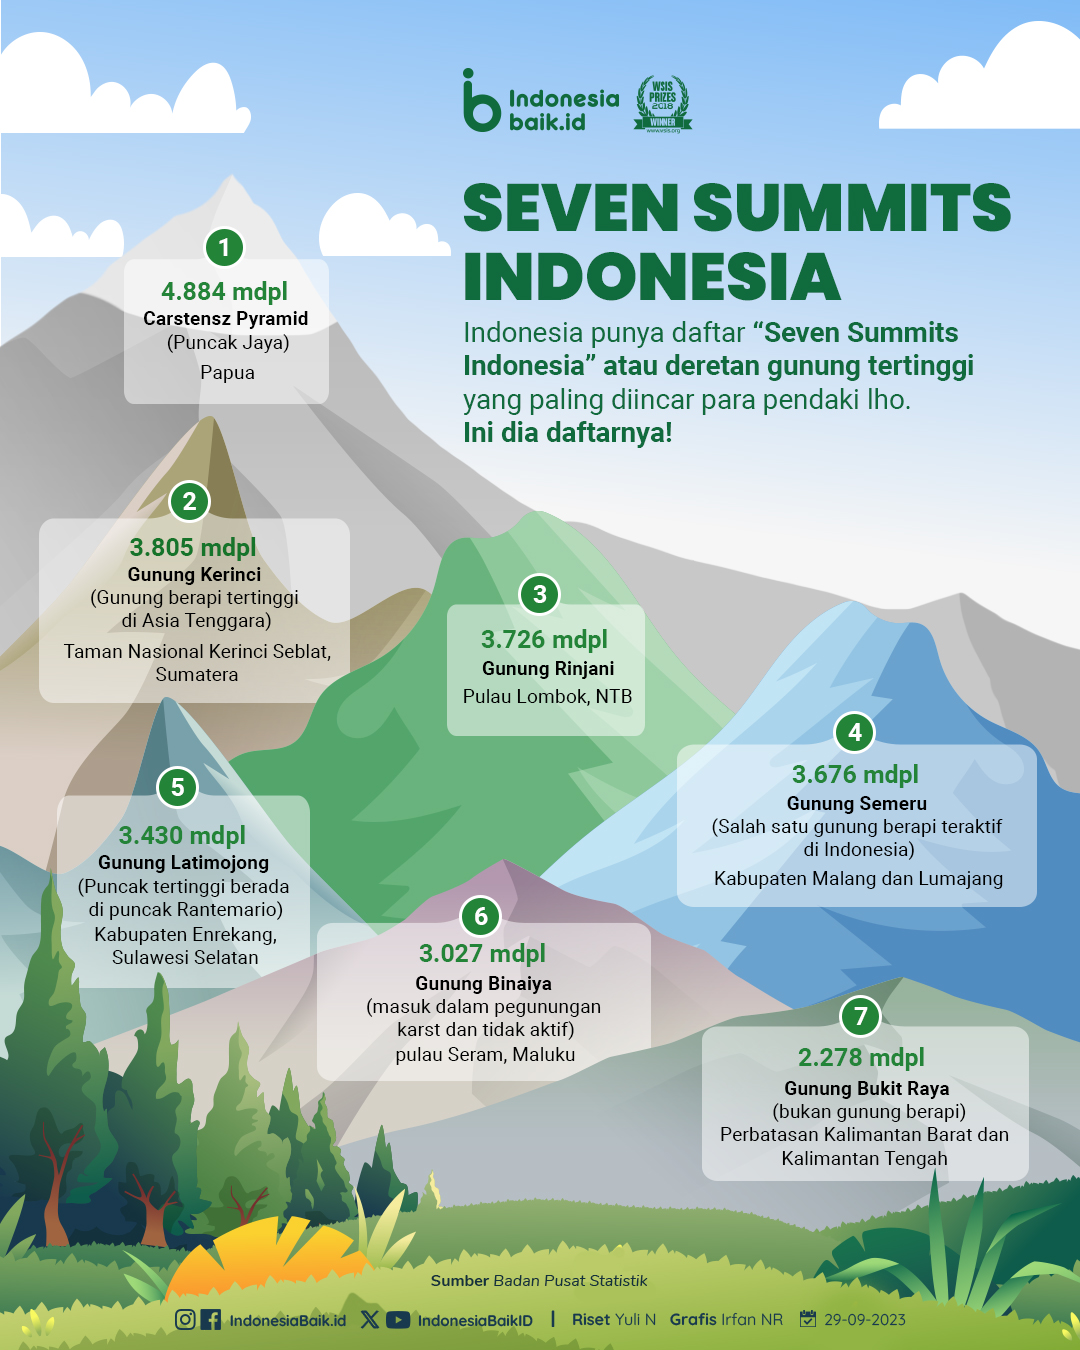 Seven Summits Indonesia